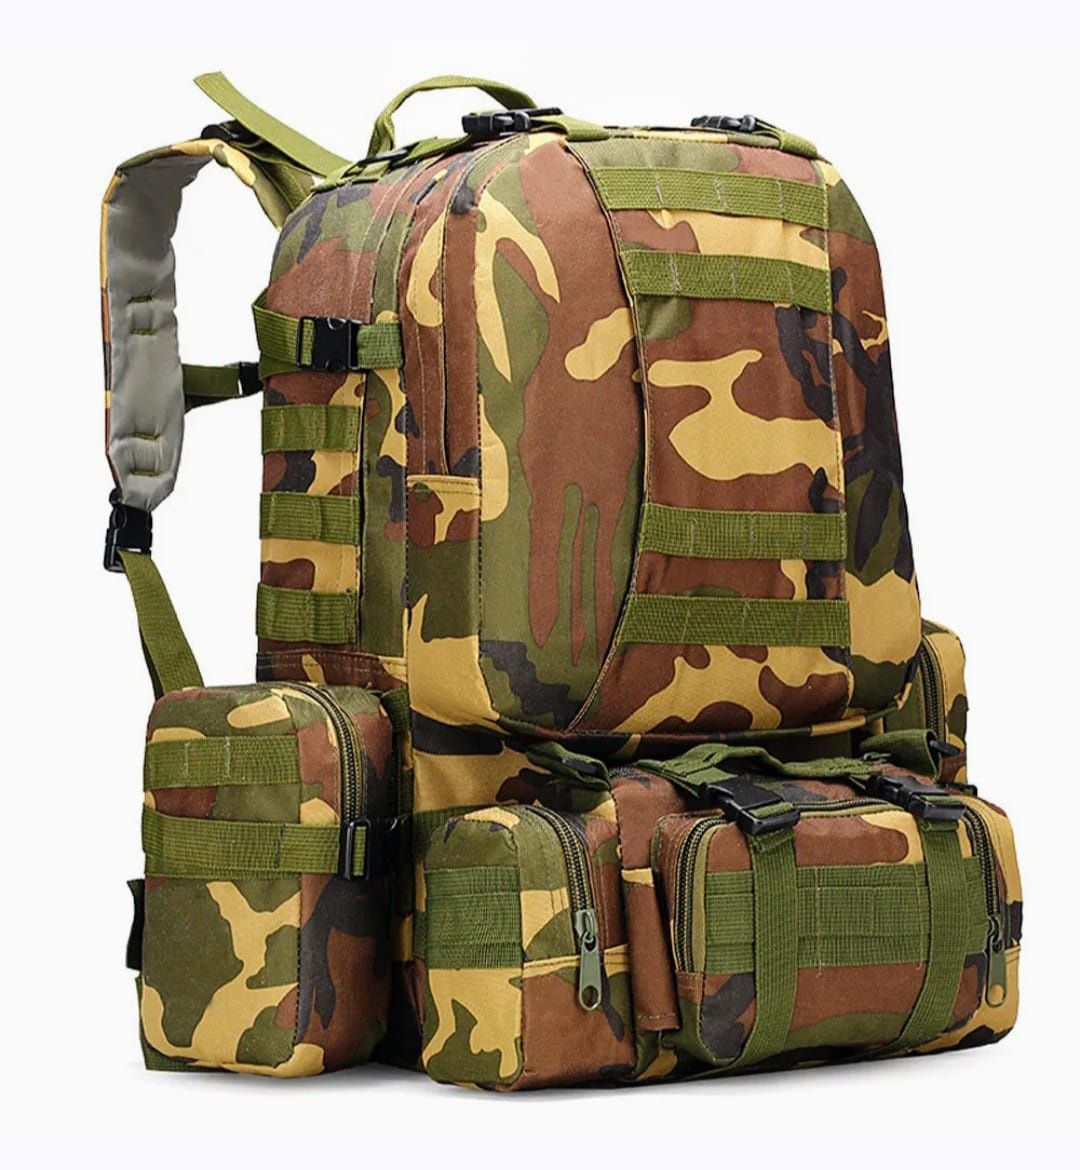 Plecak wojskowy trekkingowy survival 55l. + 3 szaszetki